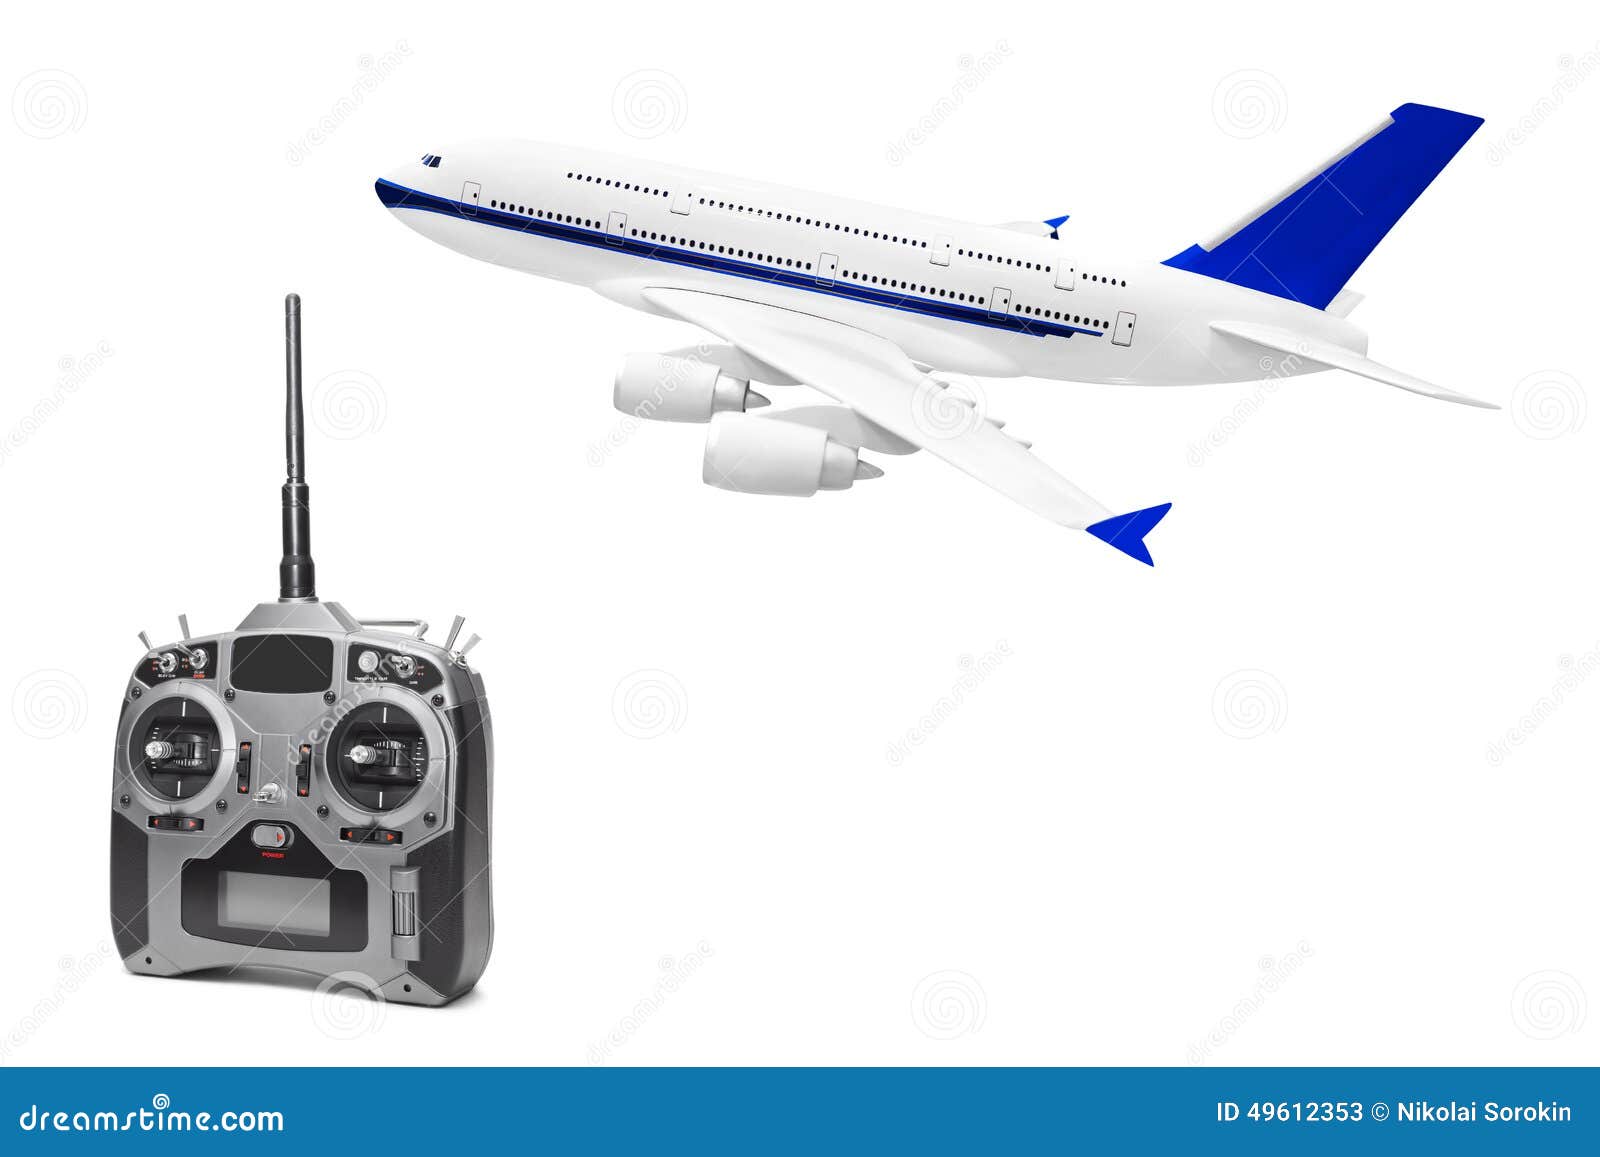 rc plane and radio remote control